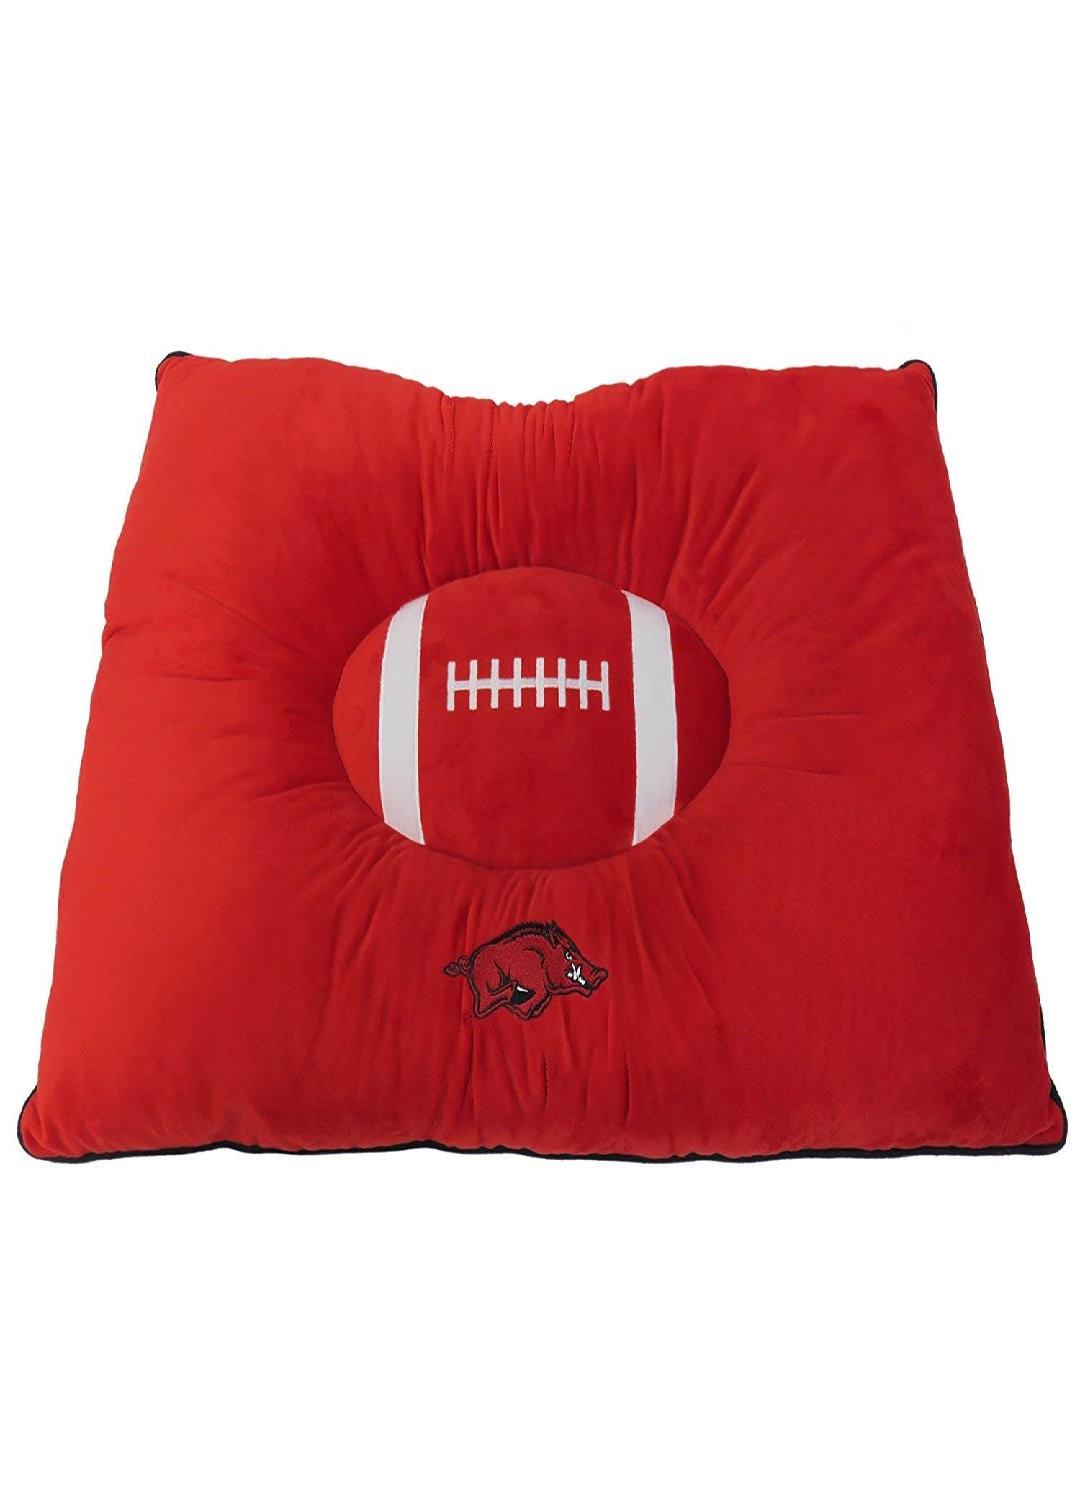 Arkansas Razorbacks Pet Pillow Bed - staygoldendoodle.com